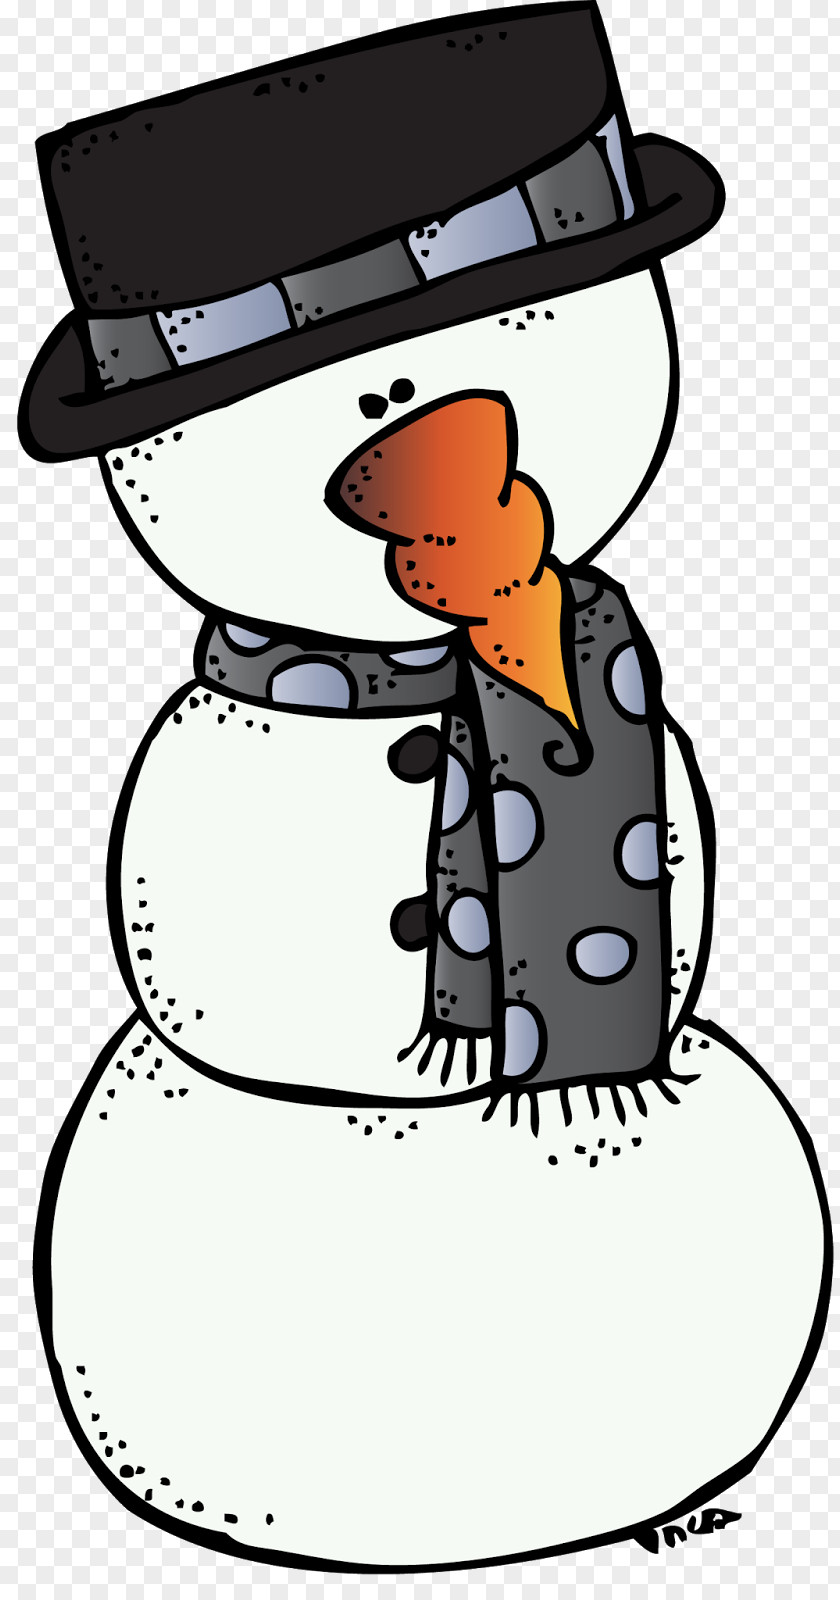 Winter Clip Art Snowman Image Illustration PNG